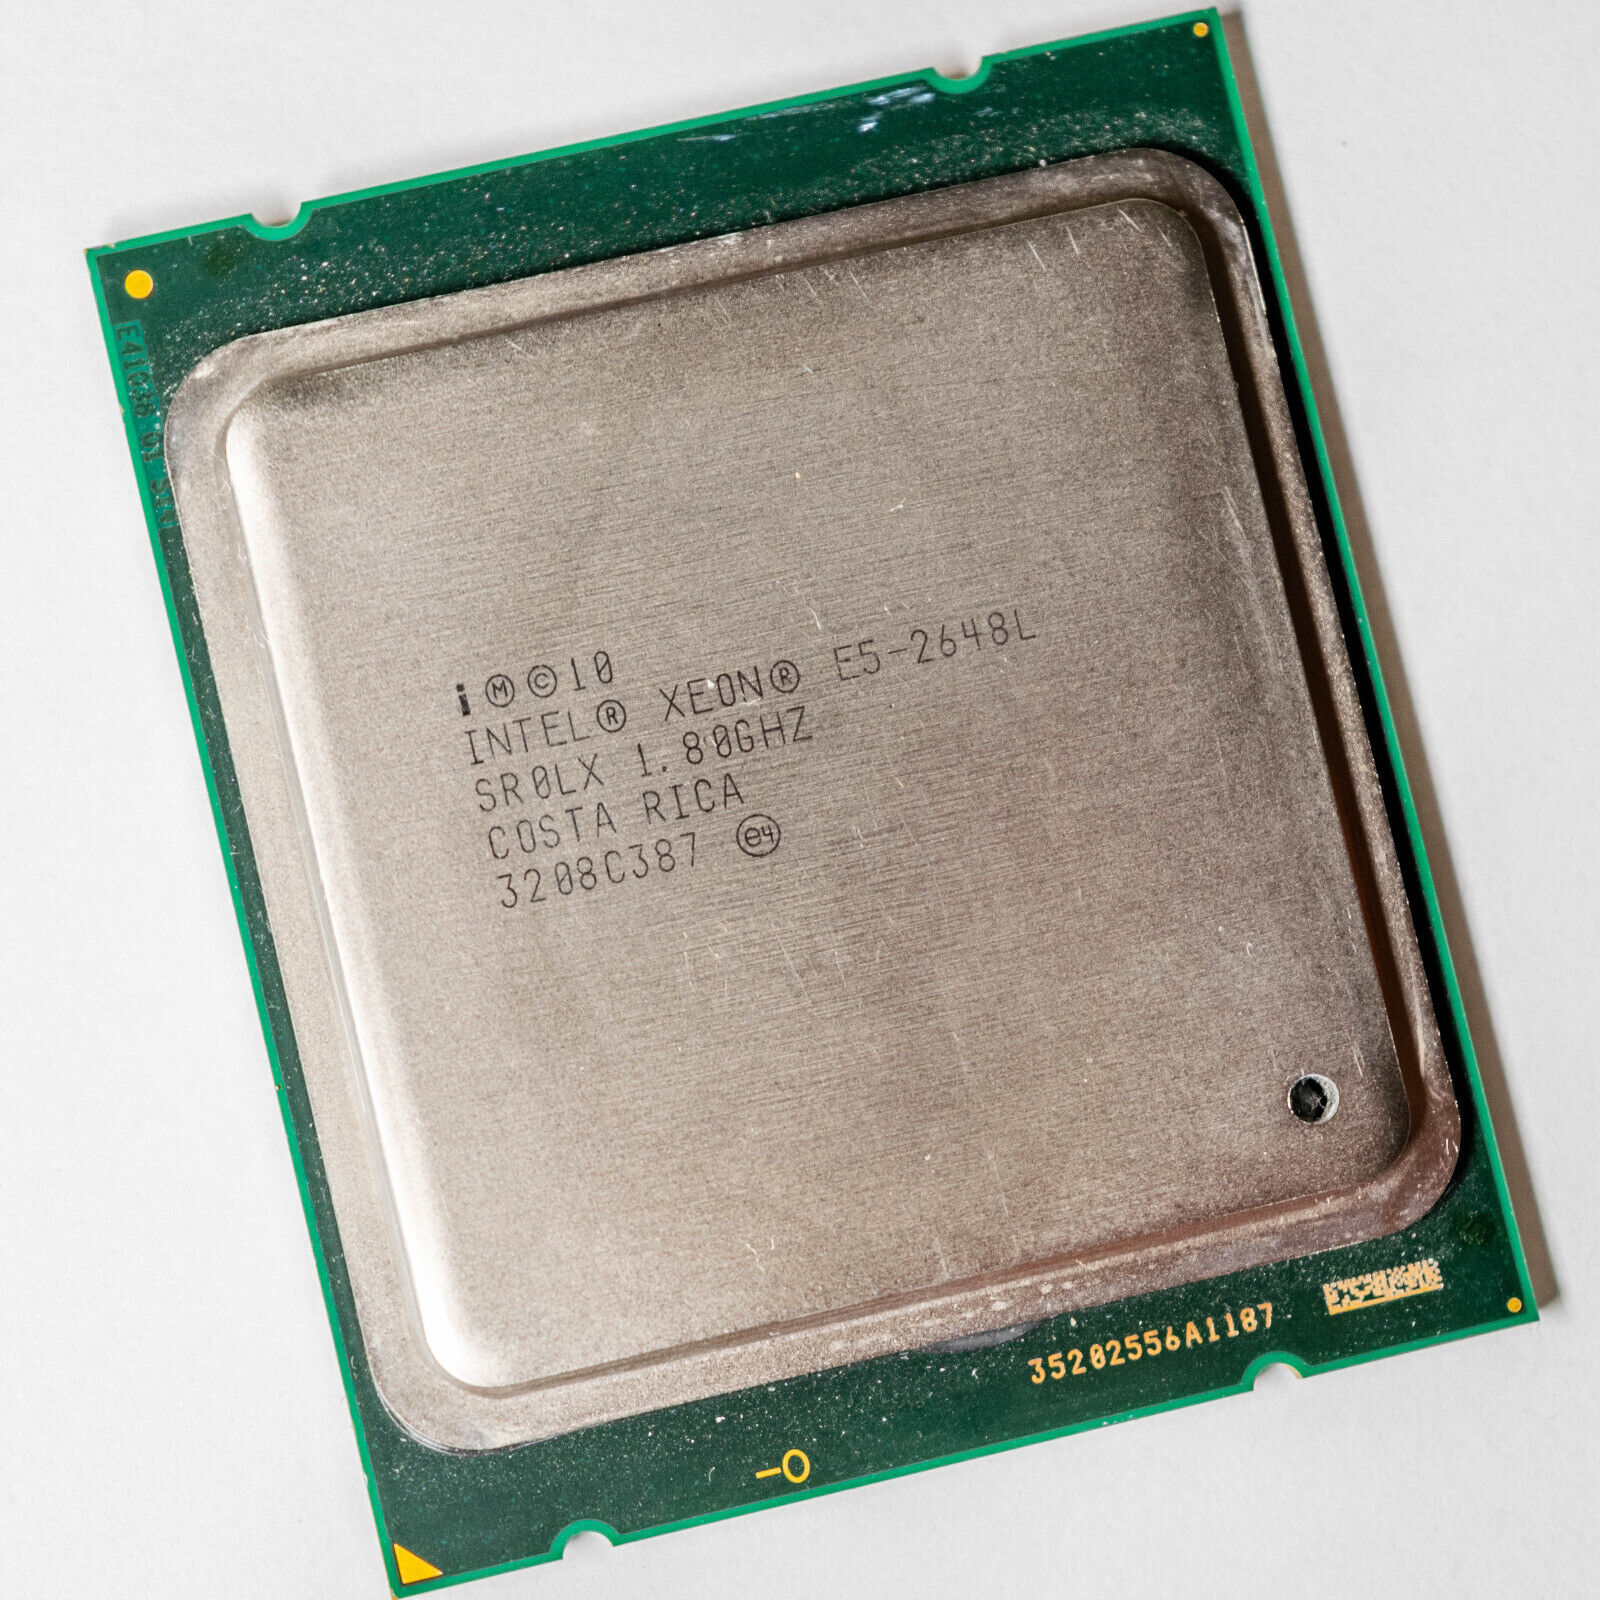 Intel Xeon E5-2648L SR0LX 1.8GHz Eight Core 70W Sandy Bridge LGA2011 Processor